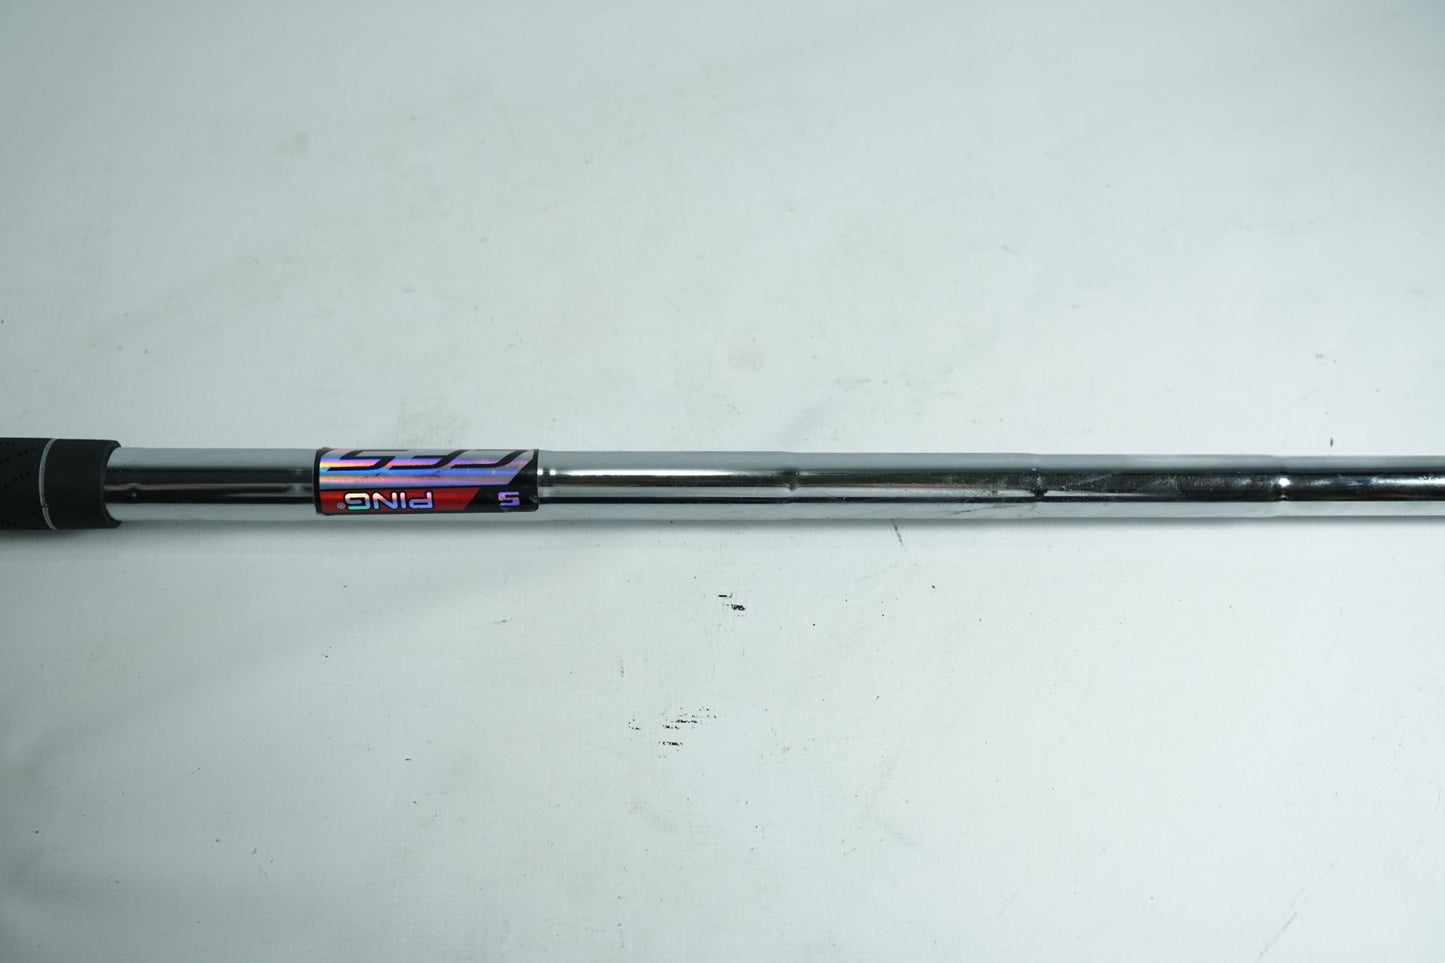 Ping G25 7 Iron / Stiff Flex Steel Shaft / New Grip